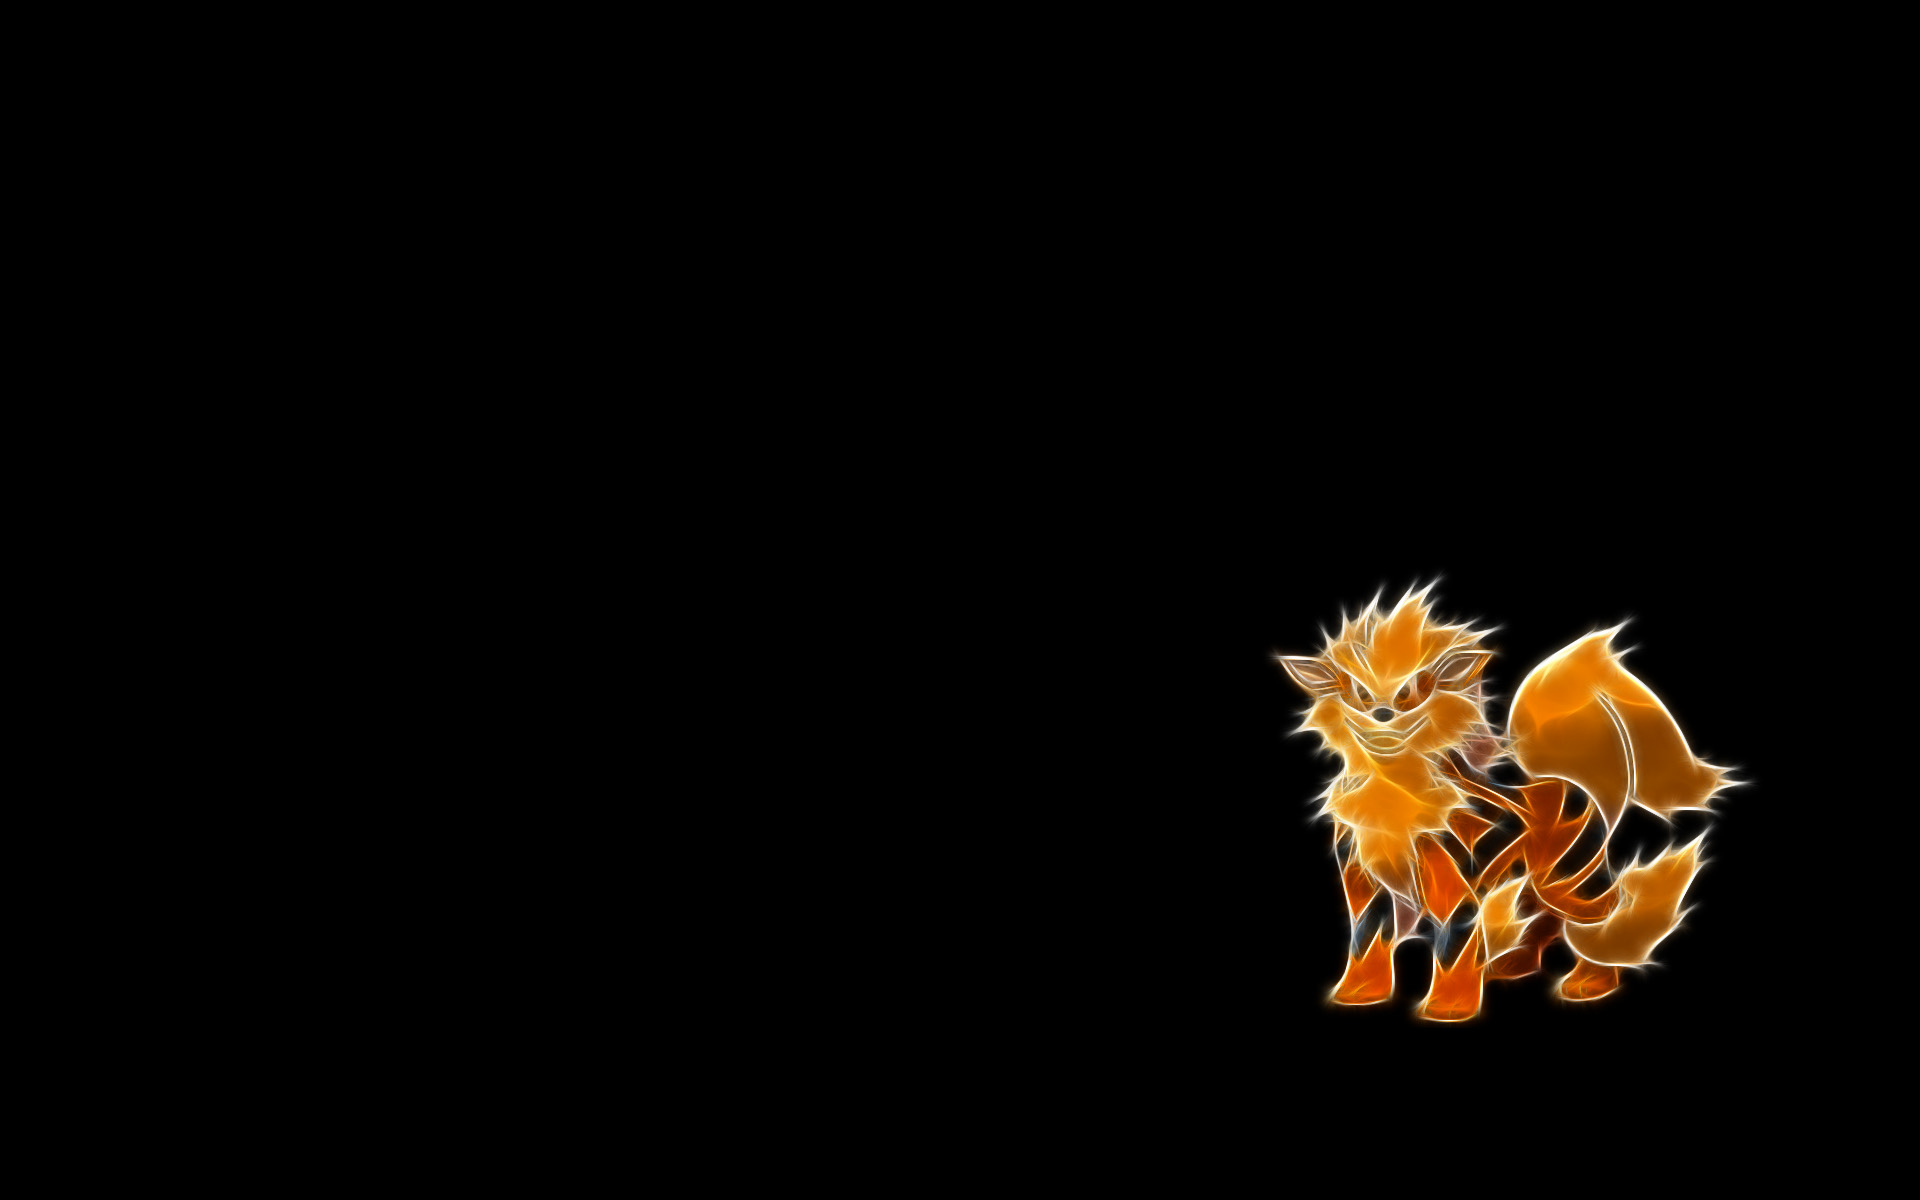 Arcanine, a fire Pokémon from Pokémon, with vibrant colors and anime style